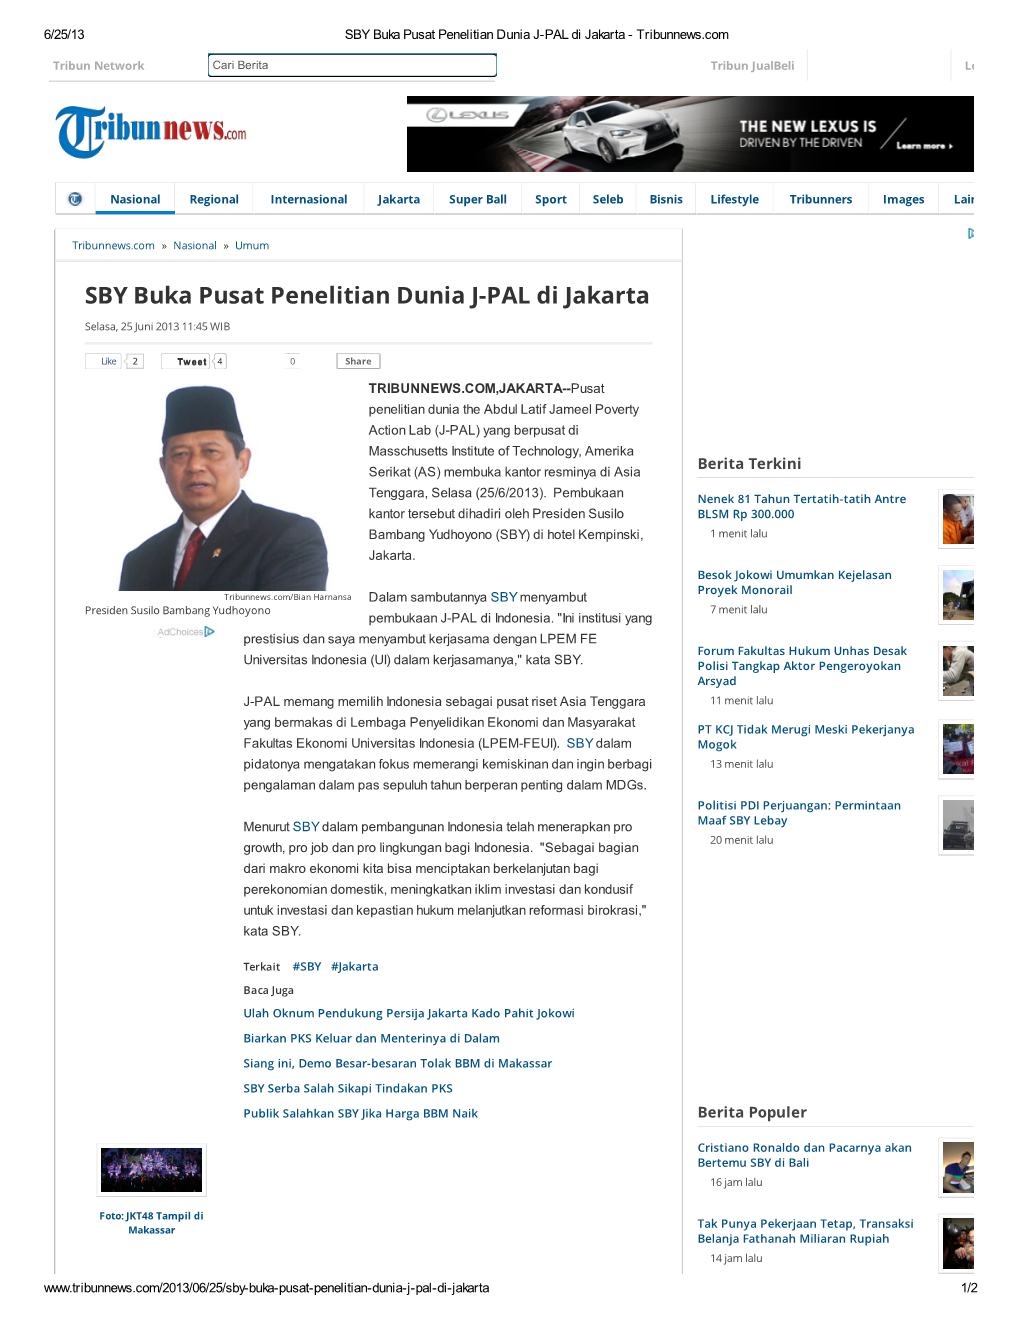 SBY Buka Pusat Penelitian Dunia J-PAL Di Jakarta - Tribunnews.Com